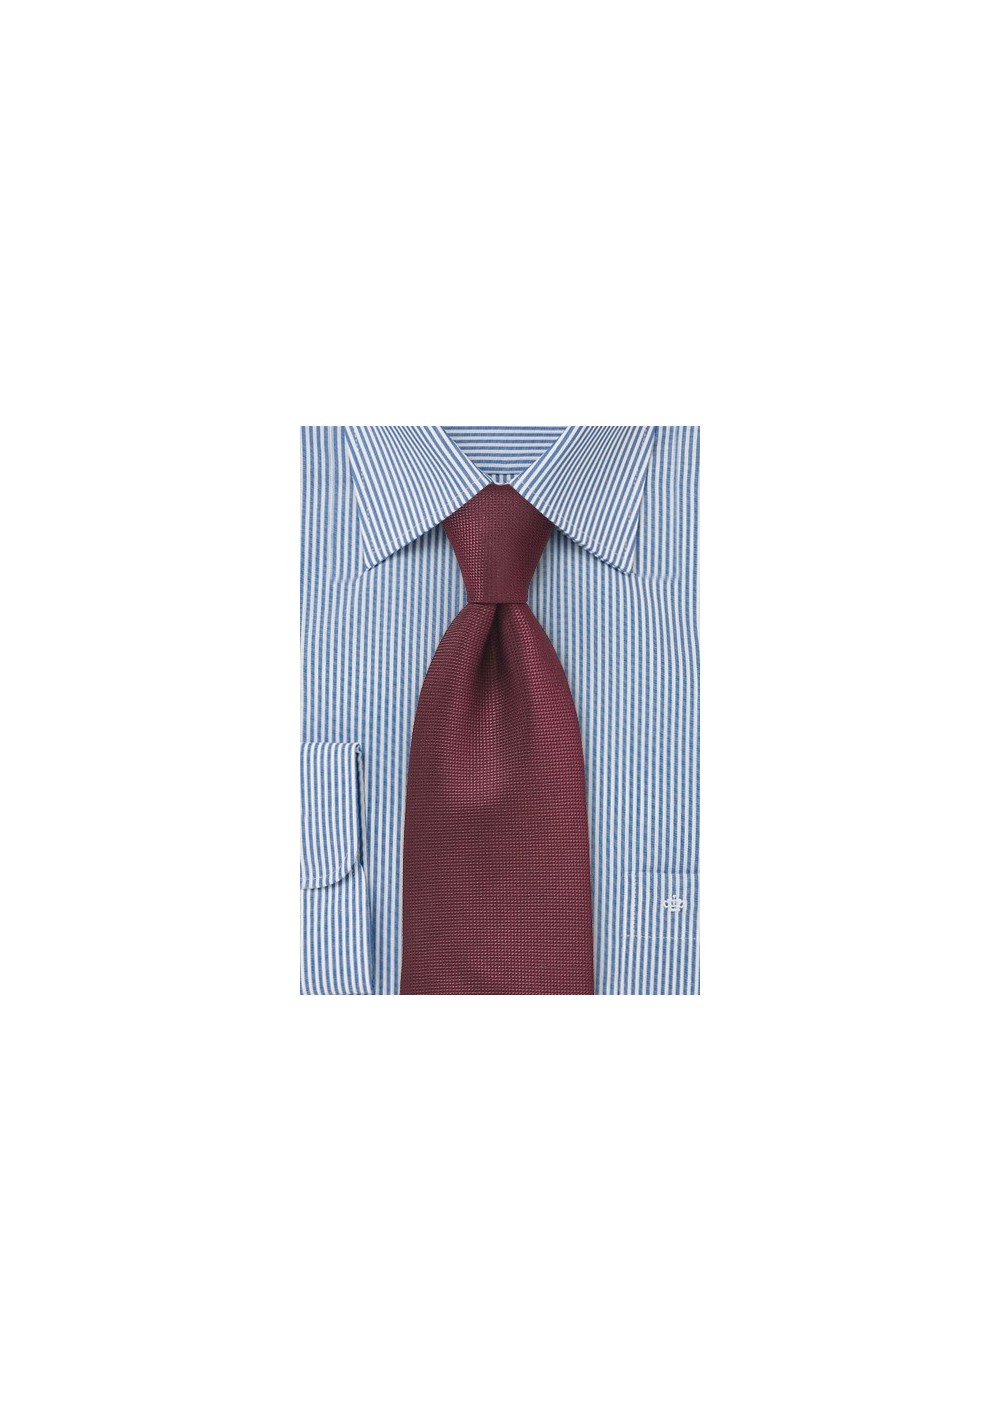 DQT Woven Plain Solid Check Burgundy Formal Work Slim Clip On Tie 